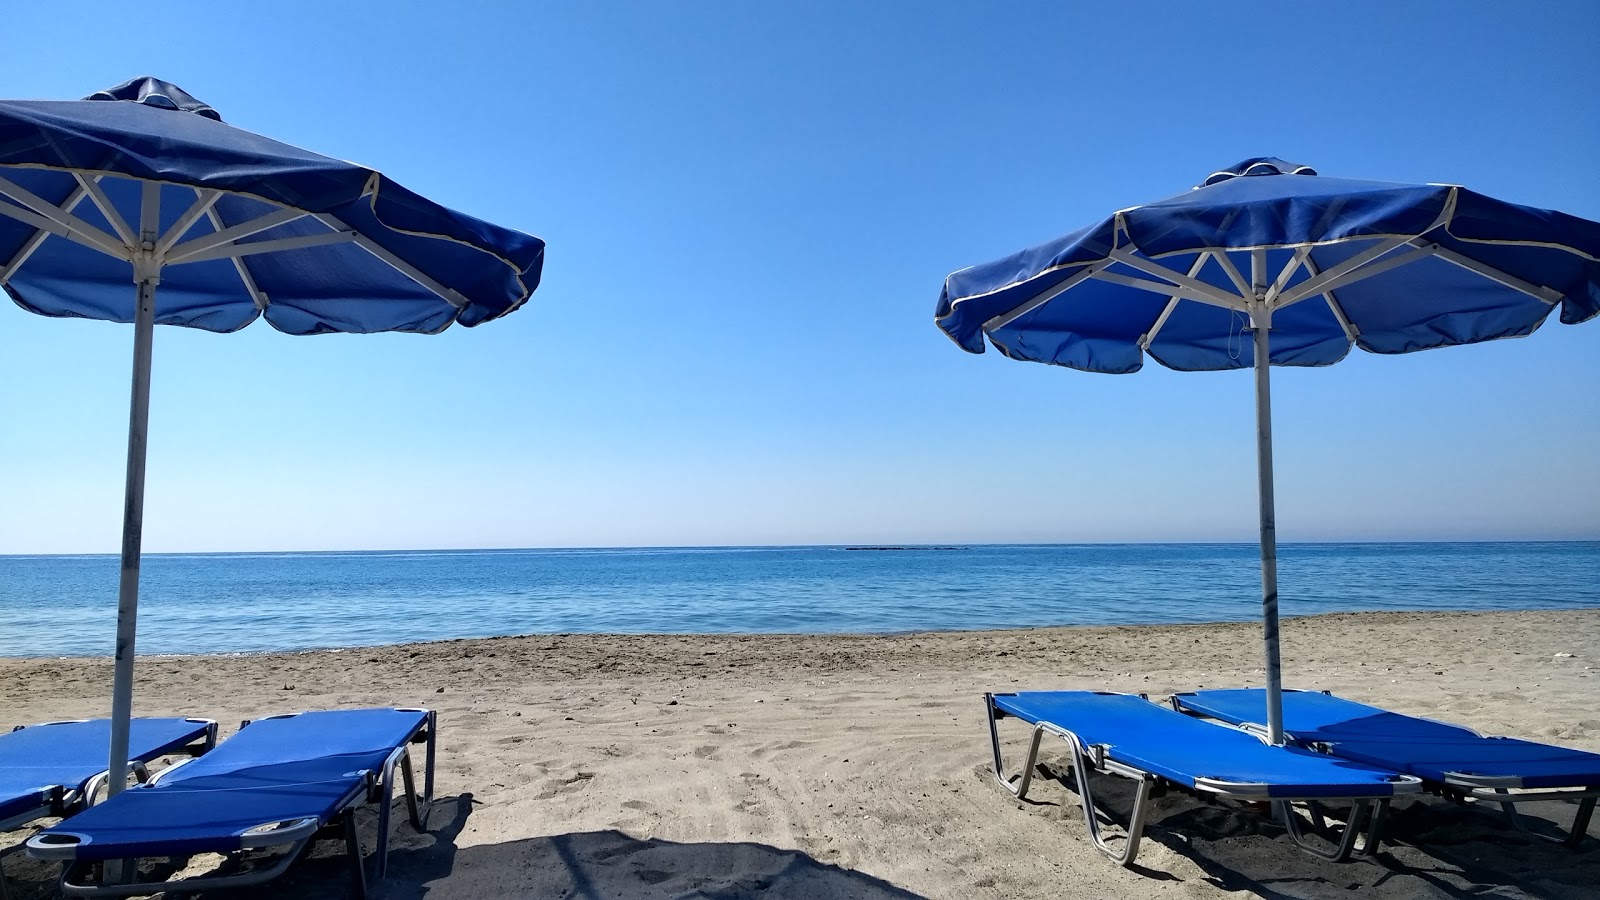 Photo of Frangokastello beach - popular place among relax connoisseurs